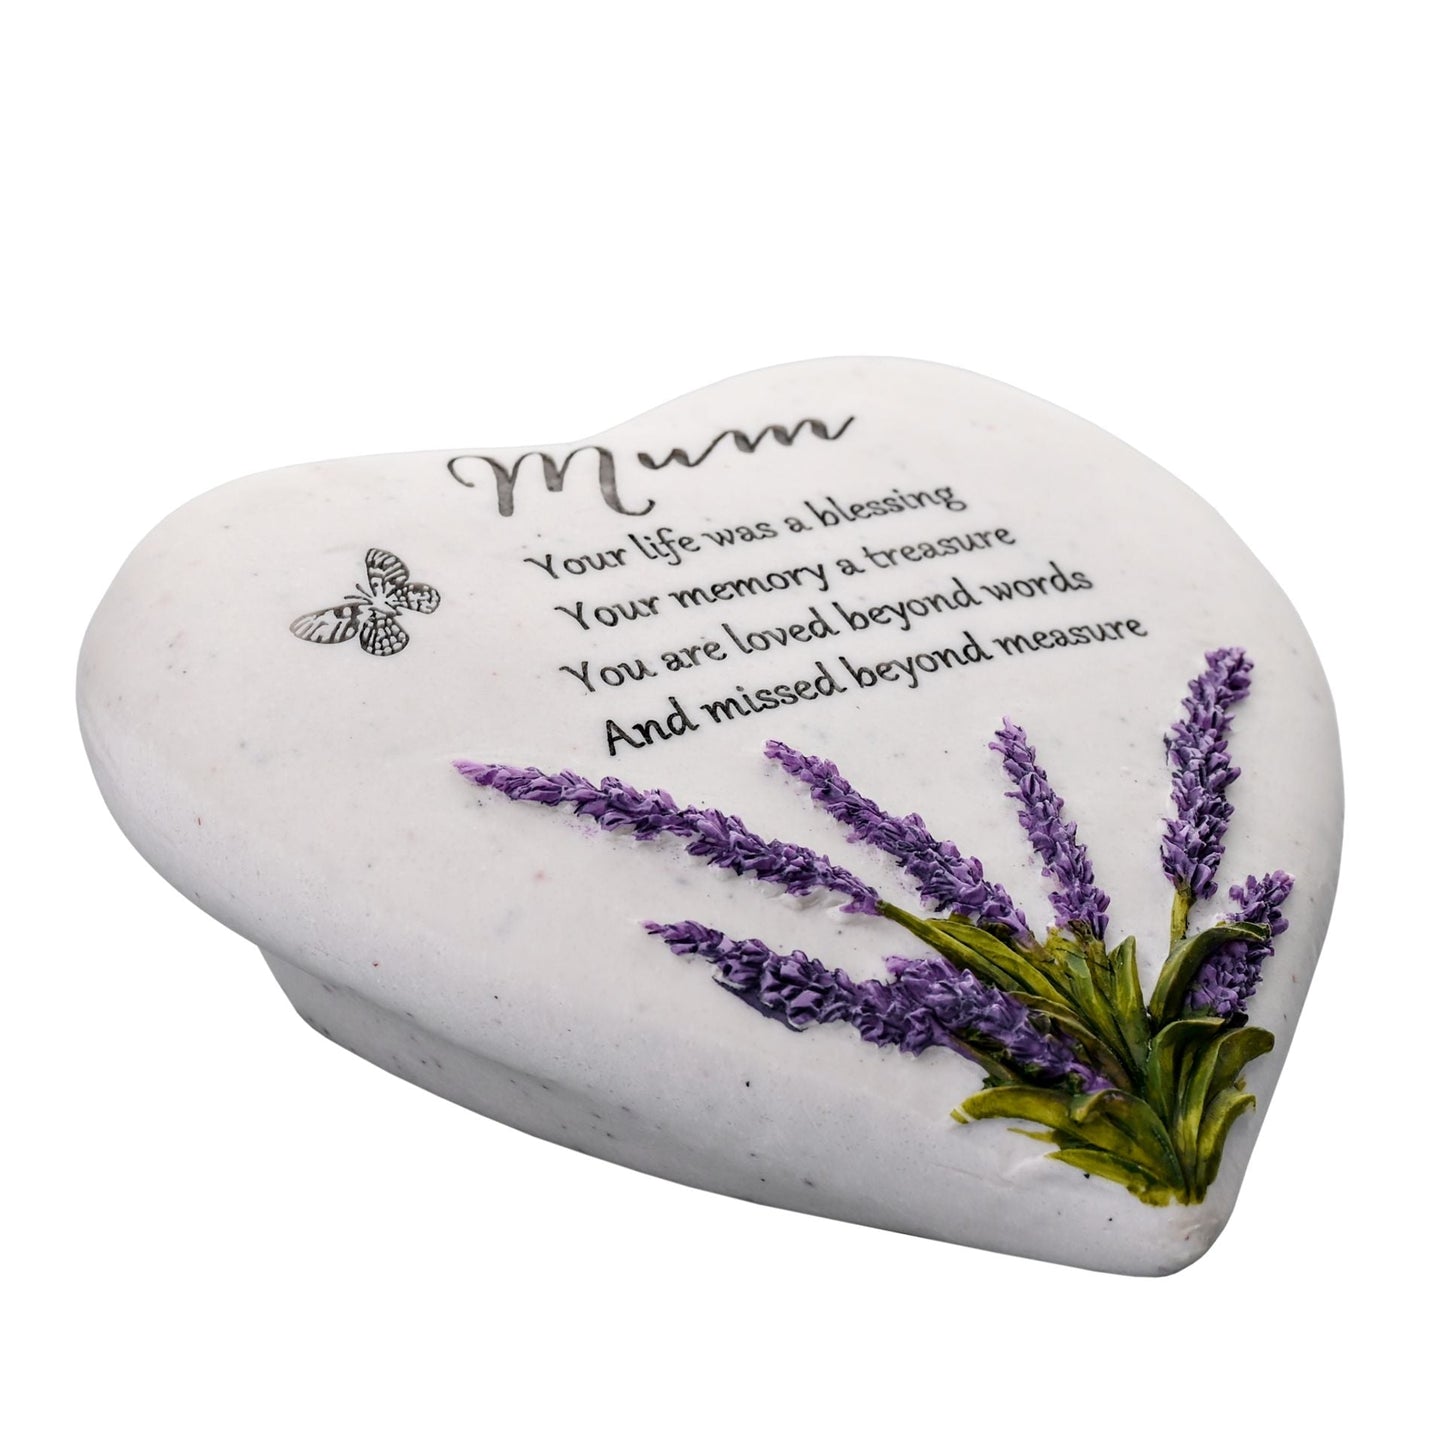 Lavender "Healing Hearts" Plaque - Mum